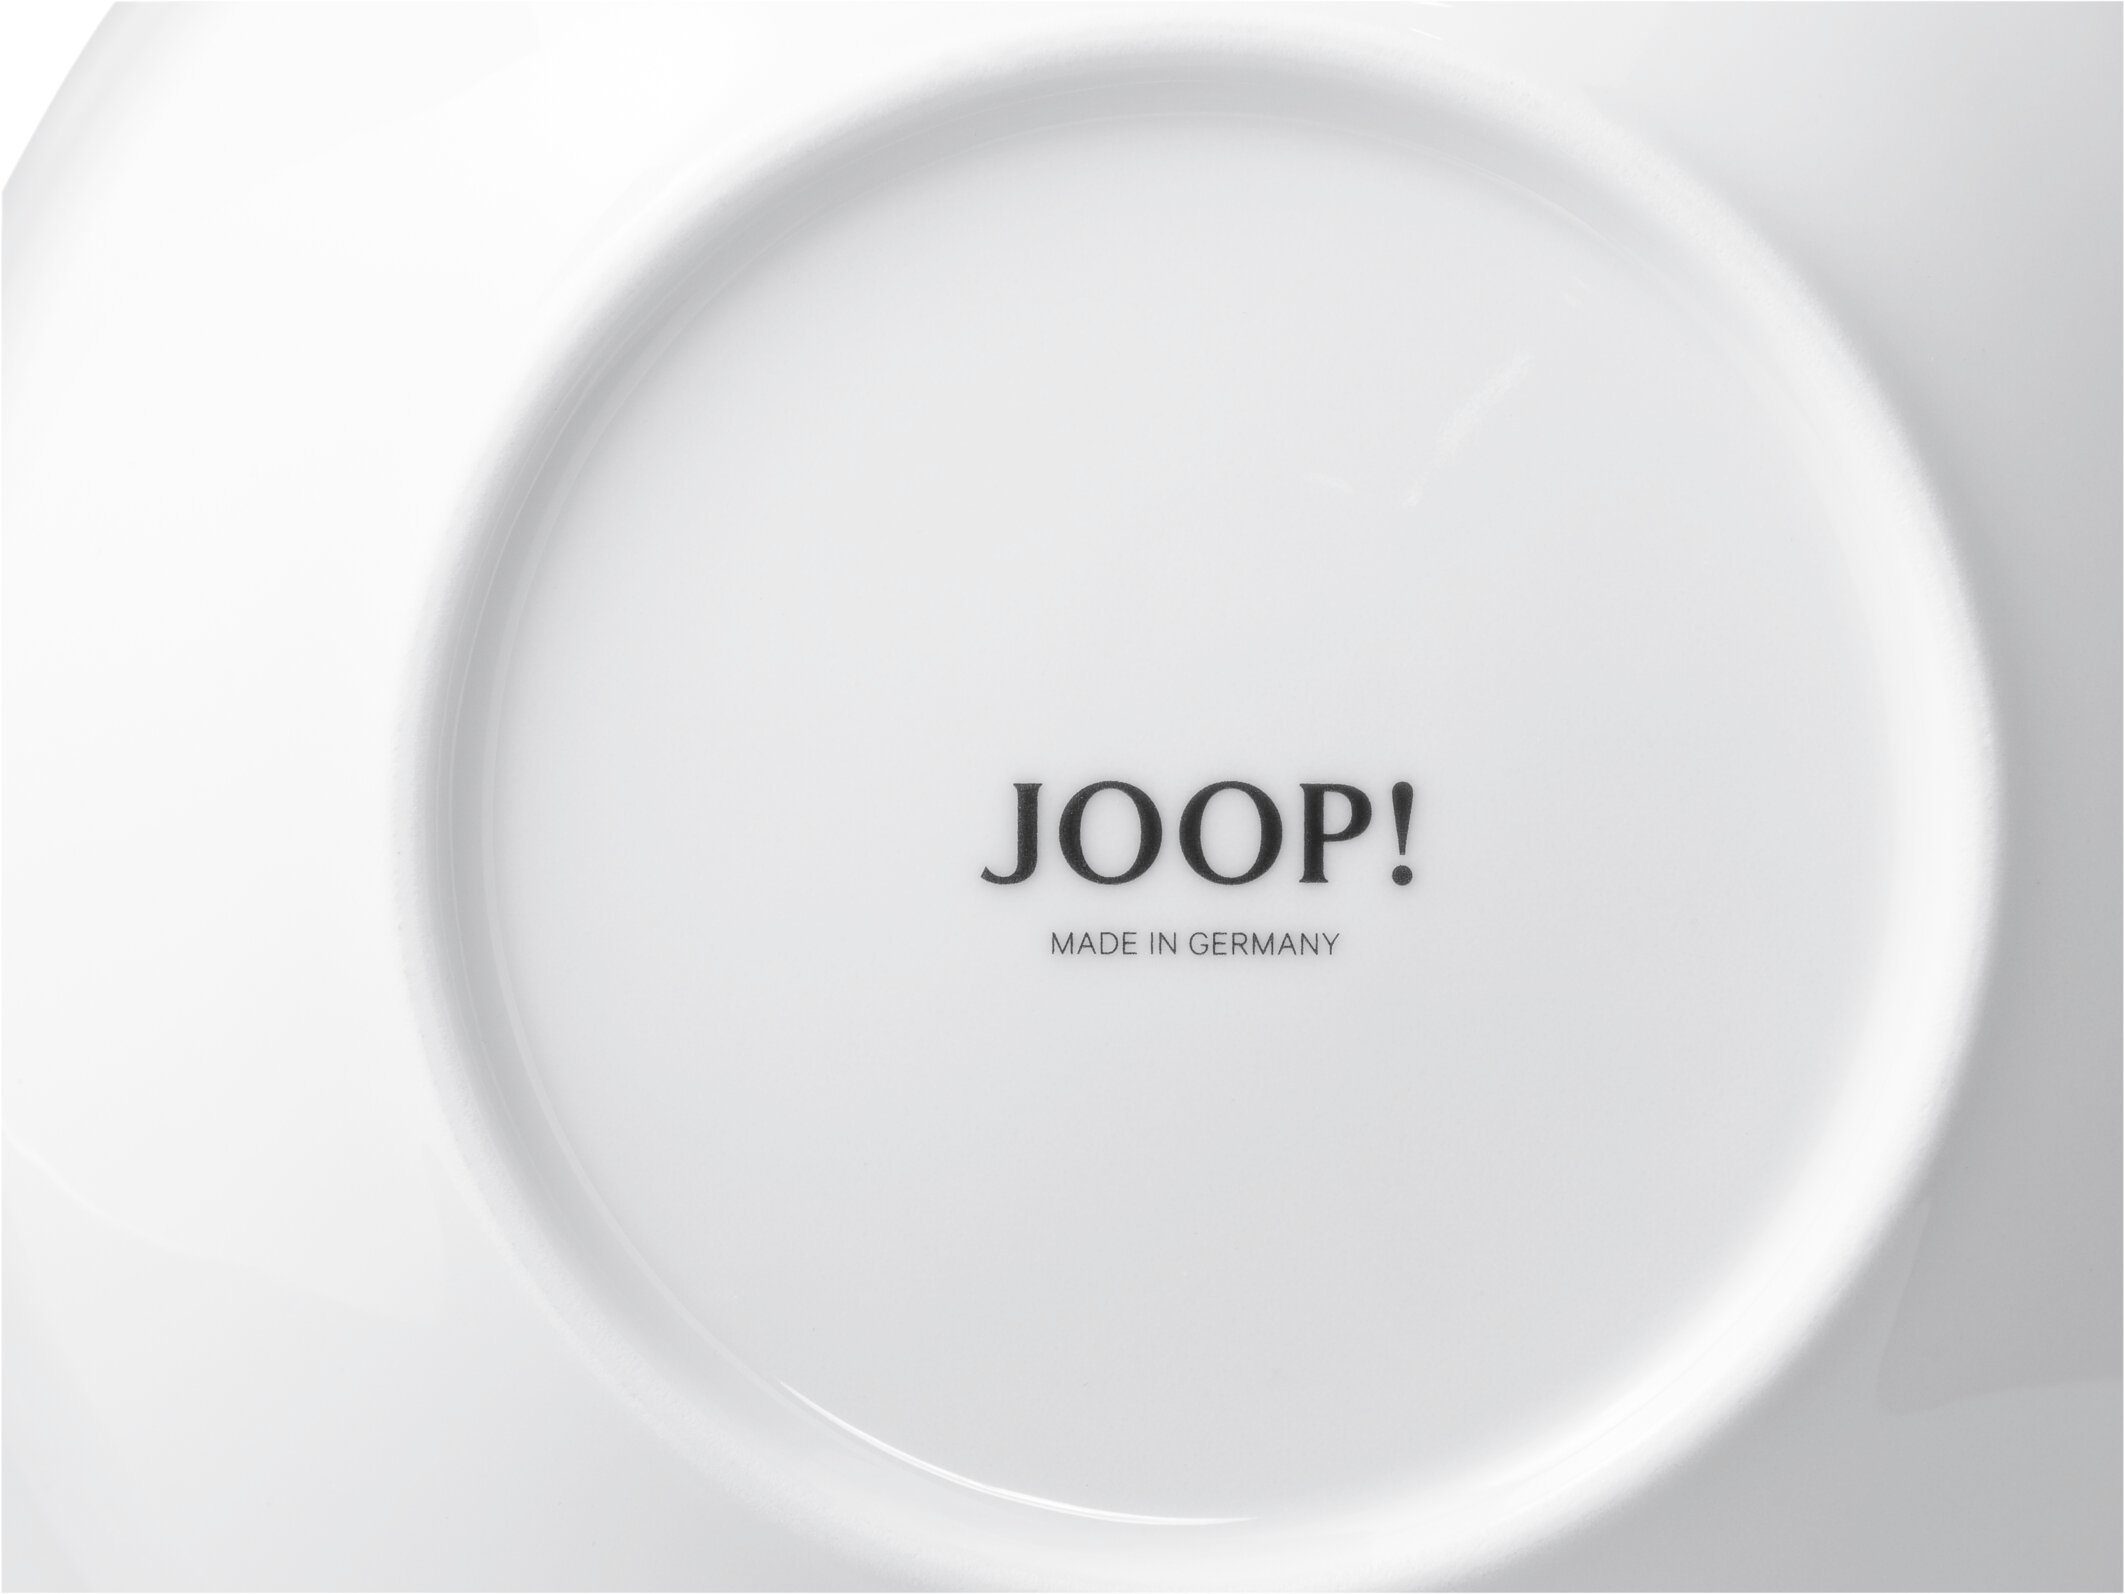 - JOOP! 2, Untertasse Untertasse Set (2 LIVING Joop! FADED CORNFLOWER St)